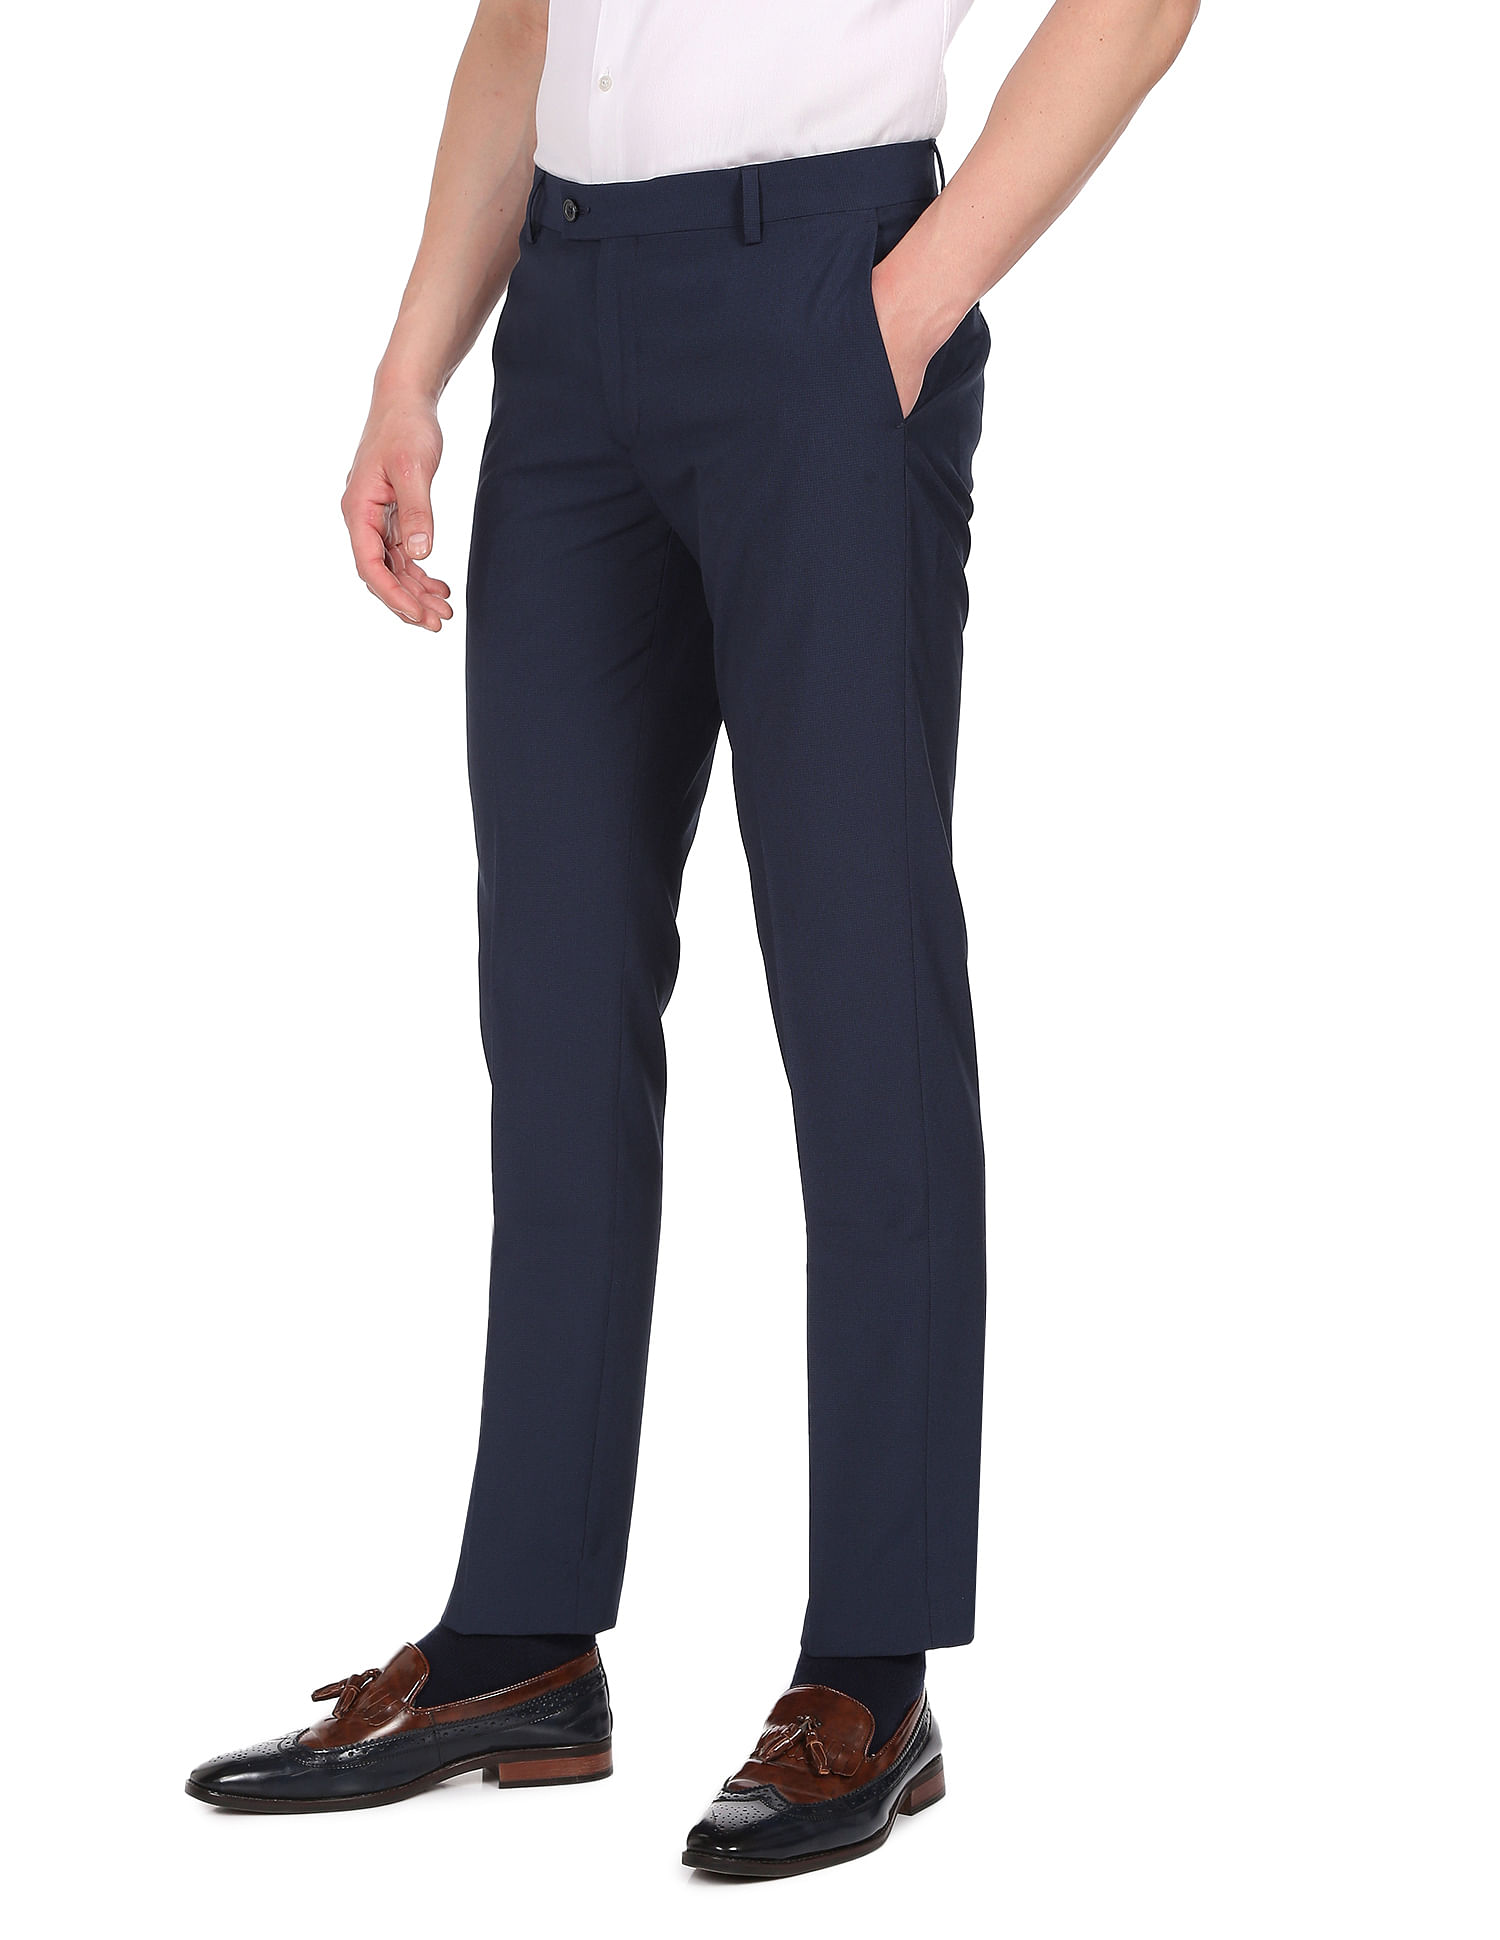 Arrow Mens Beige / Olive Gray dress slack pants Size 38 x 29 USA Clothes |  eBay